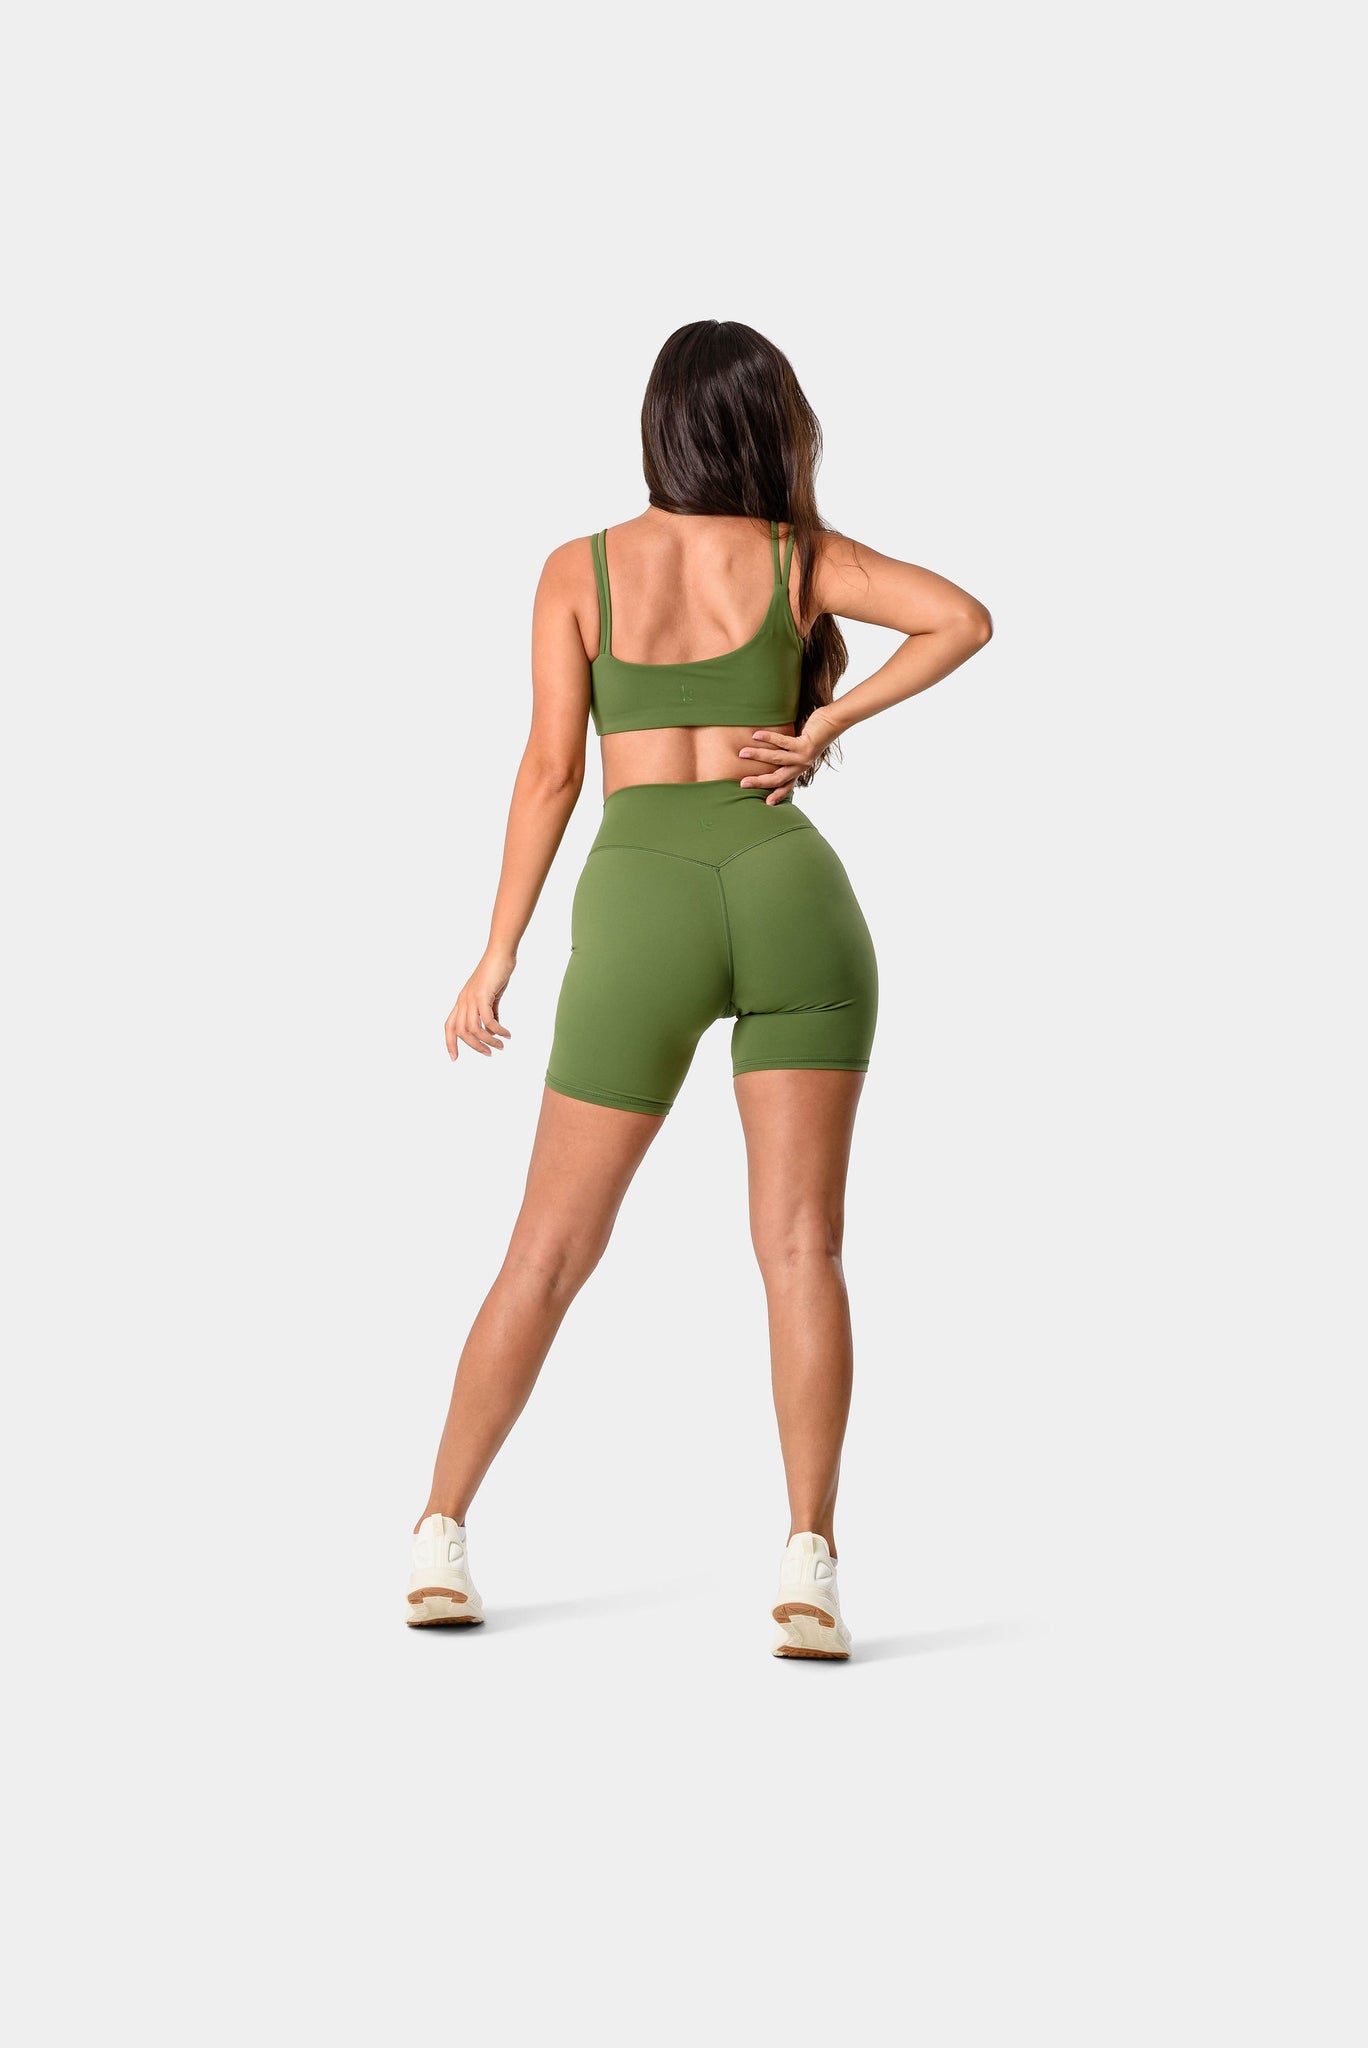 Serenity Shorts 6" - Jade Green